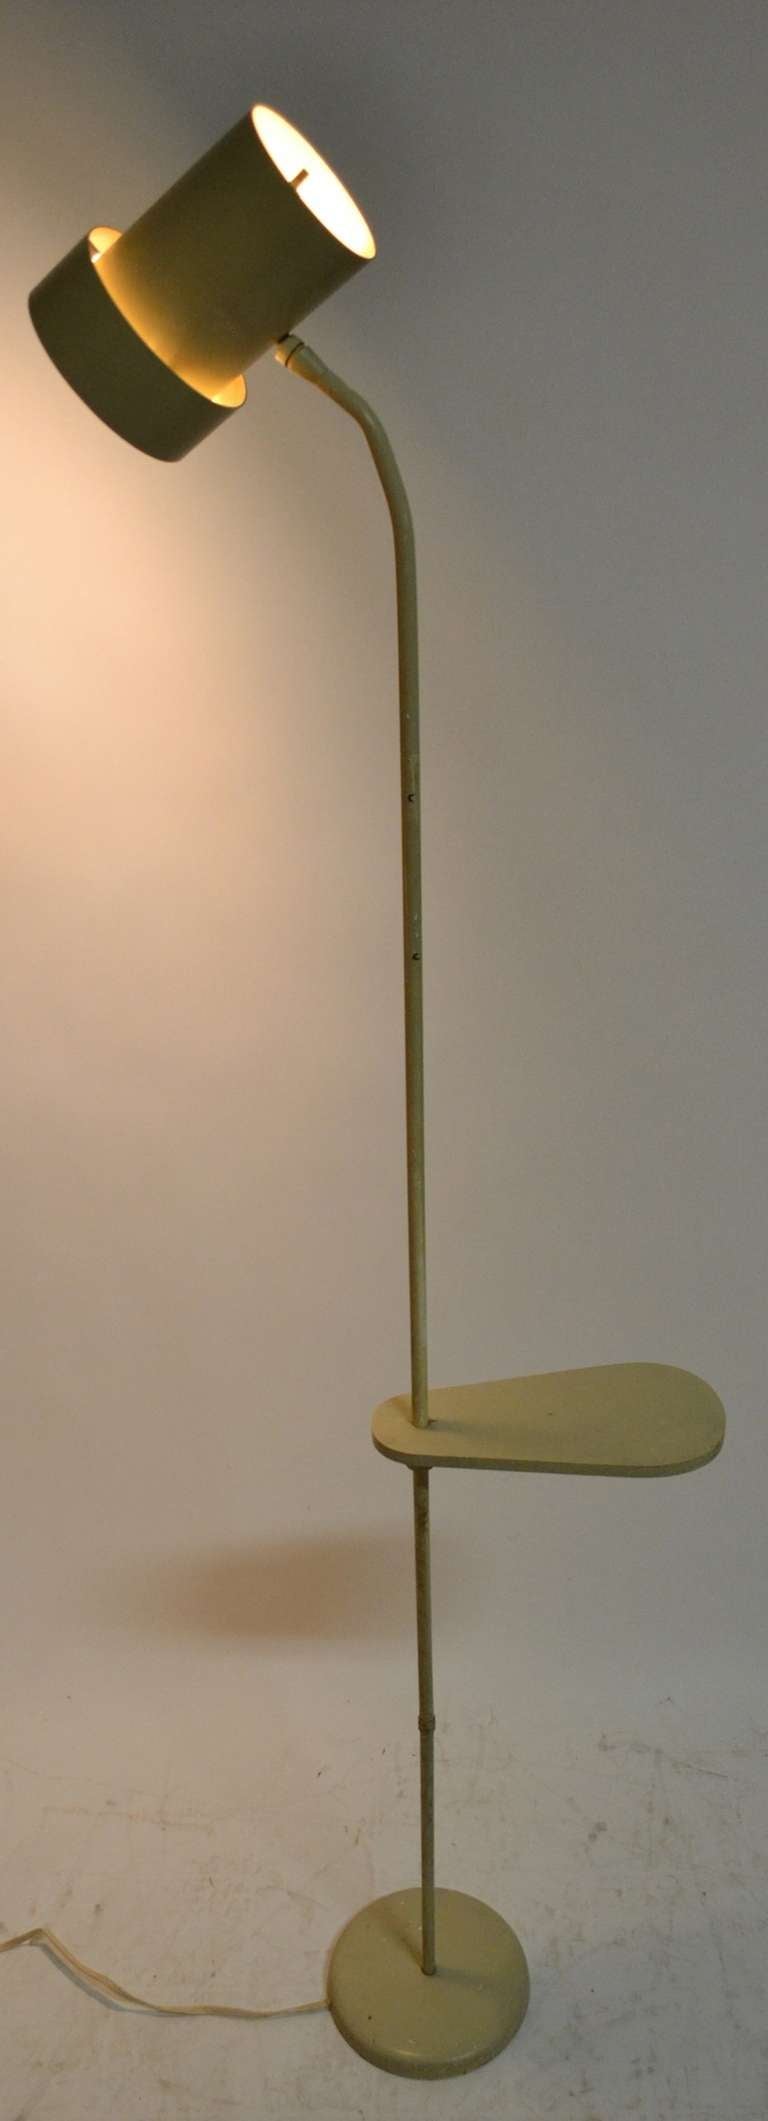 Unusual Possibly Unique Adjustable Floor Lamp at 1stdibs